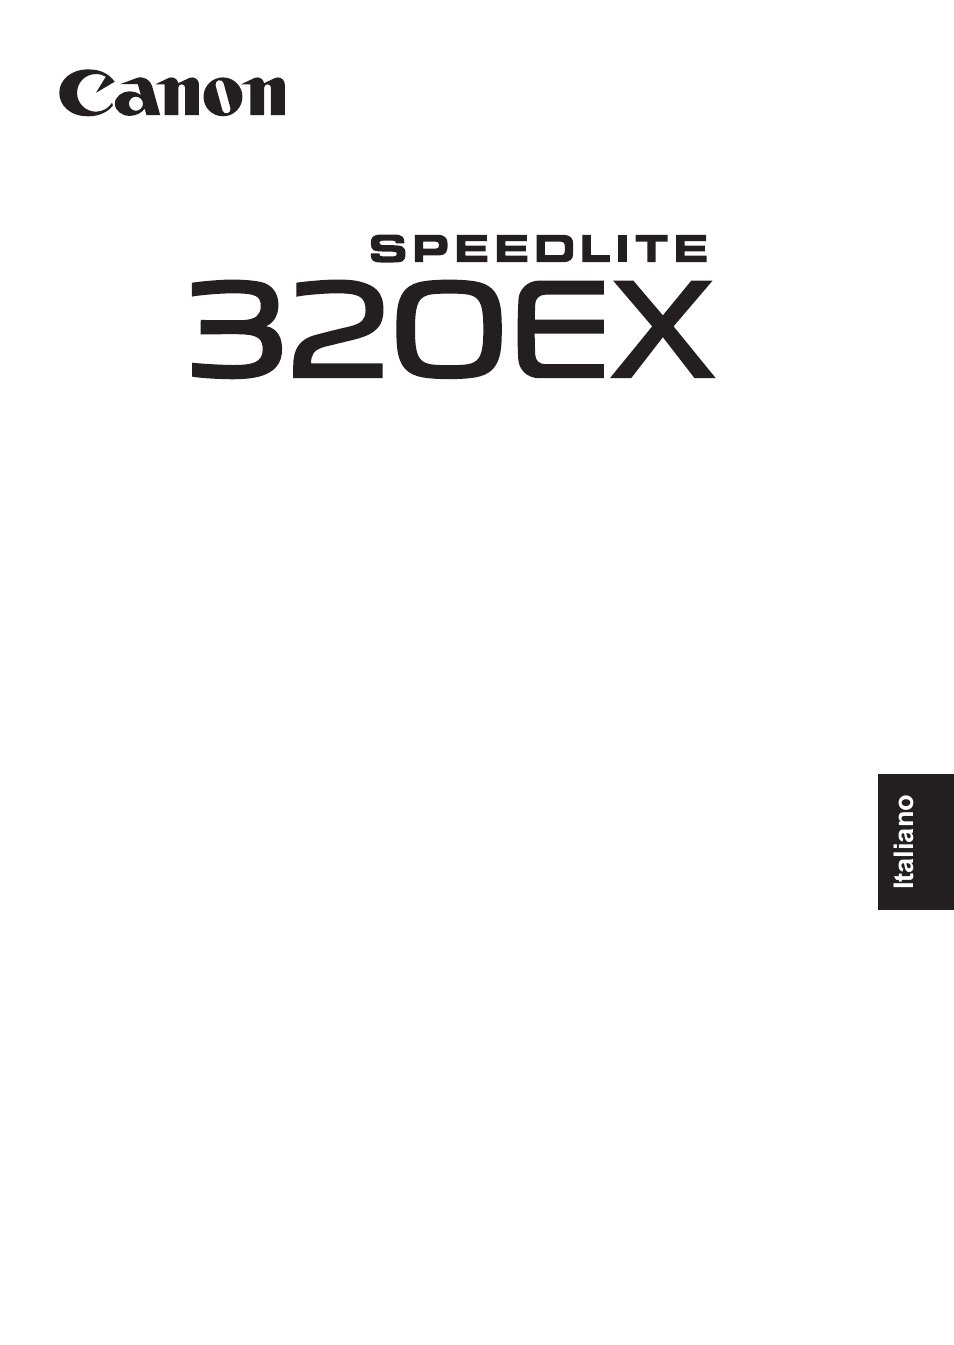 Инструкция по эксплуатации Canon Speedlite 320EX | Страница 51 / 196